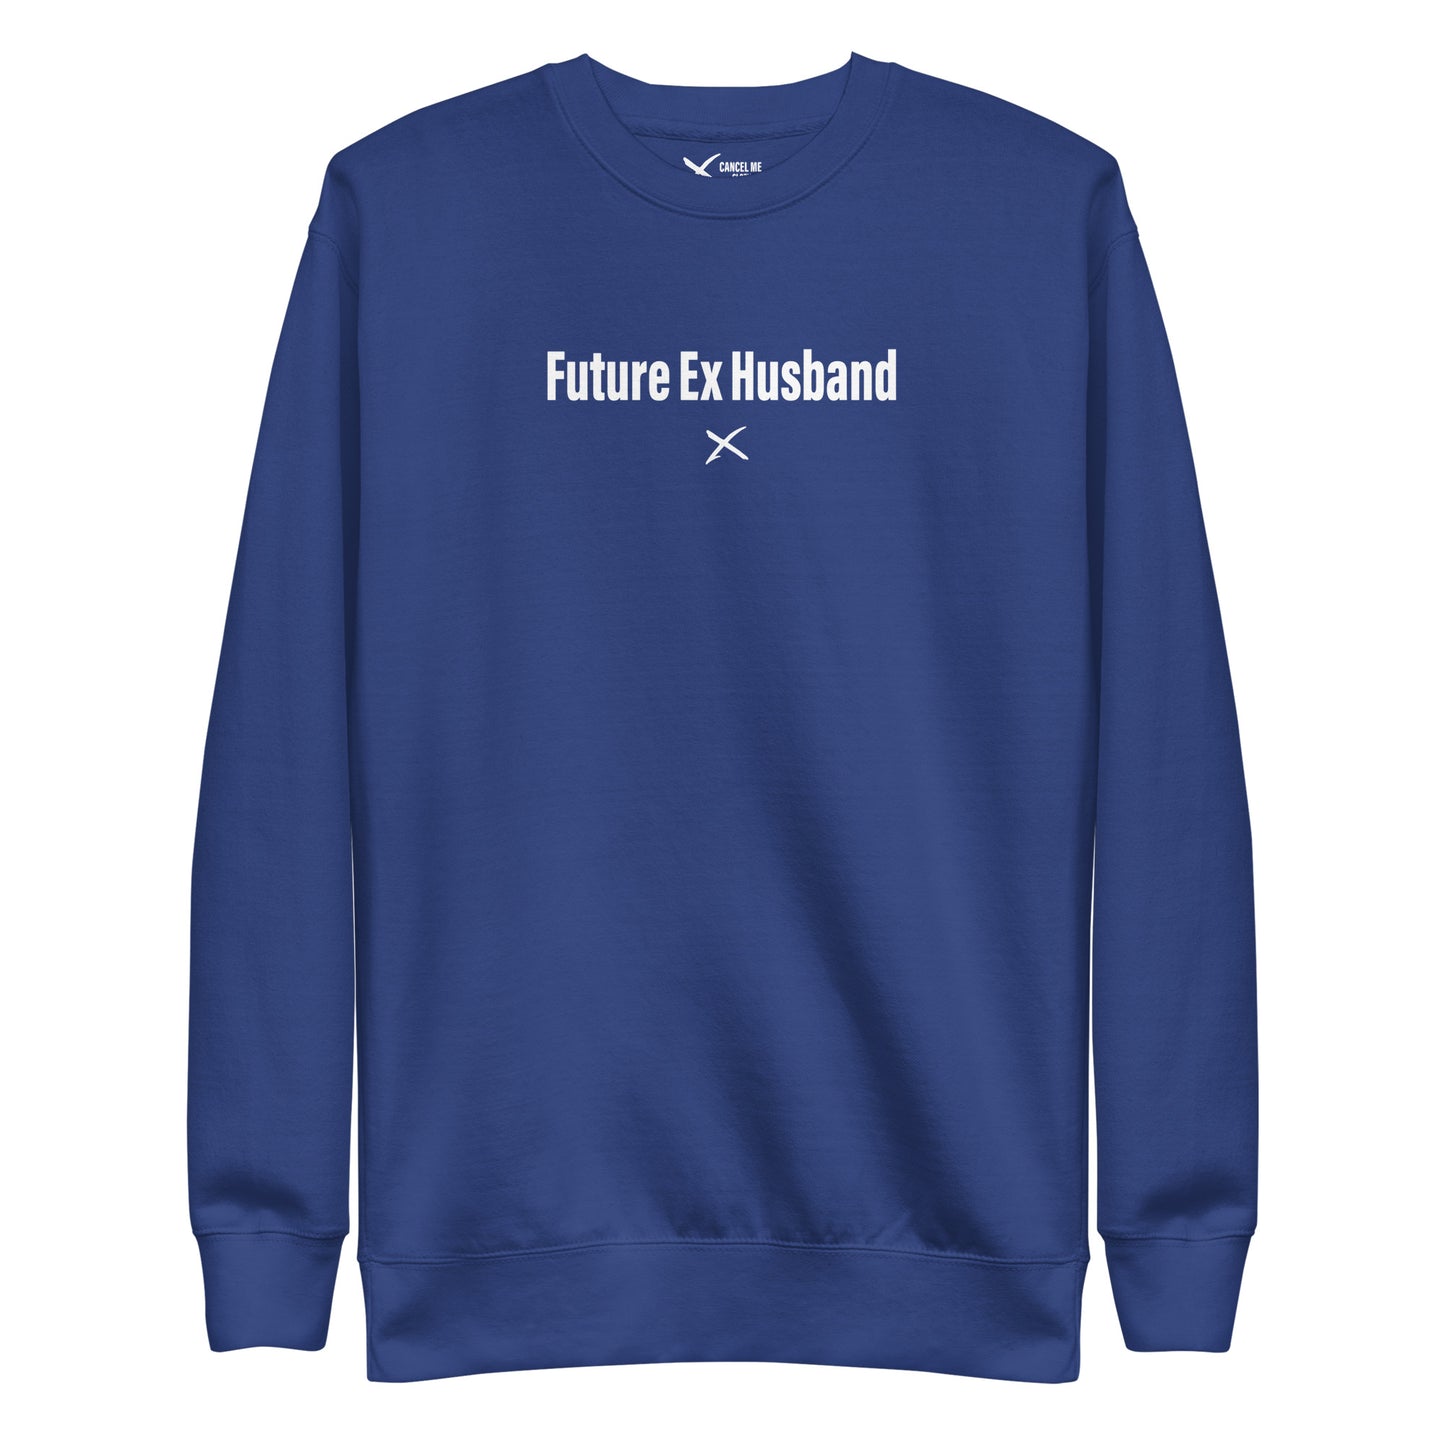 Future Ex Husband - Sweatshirt